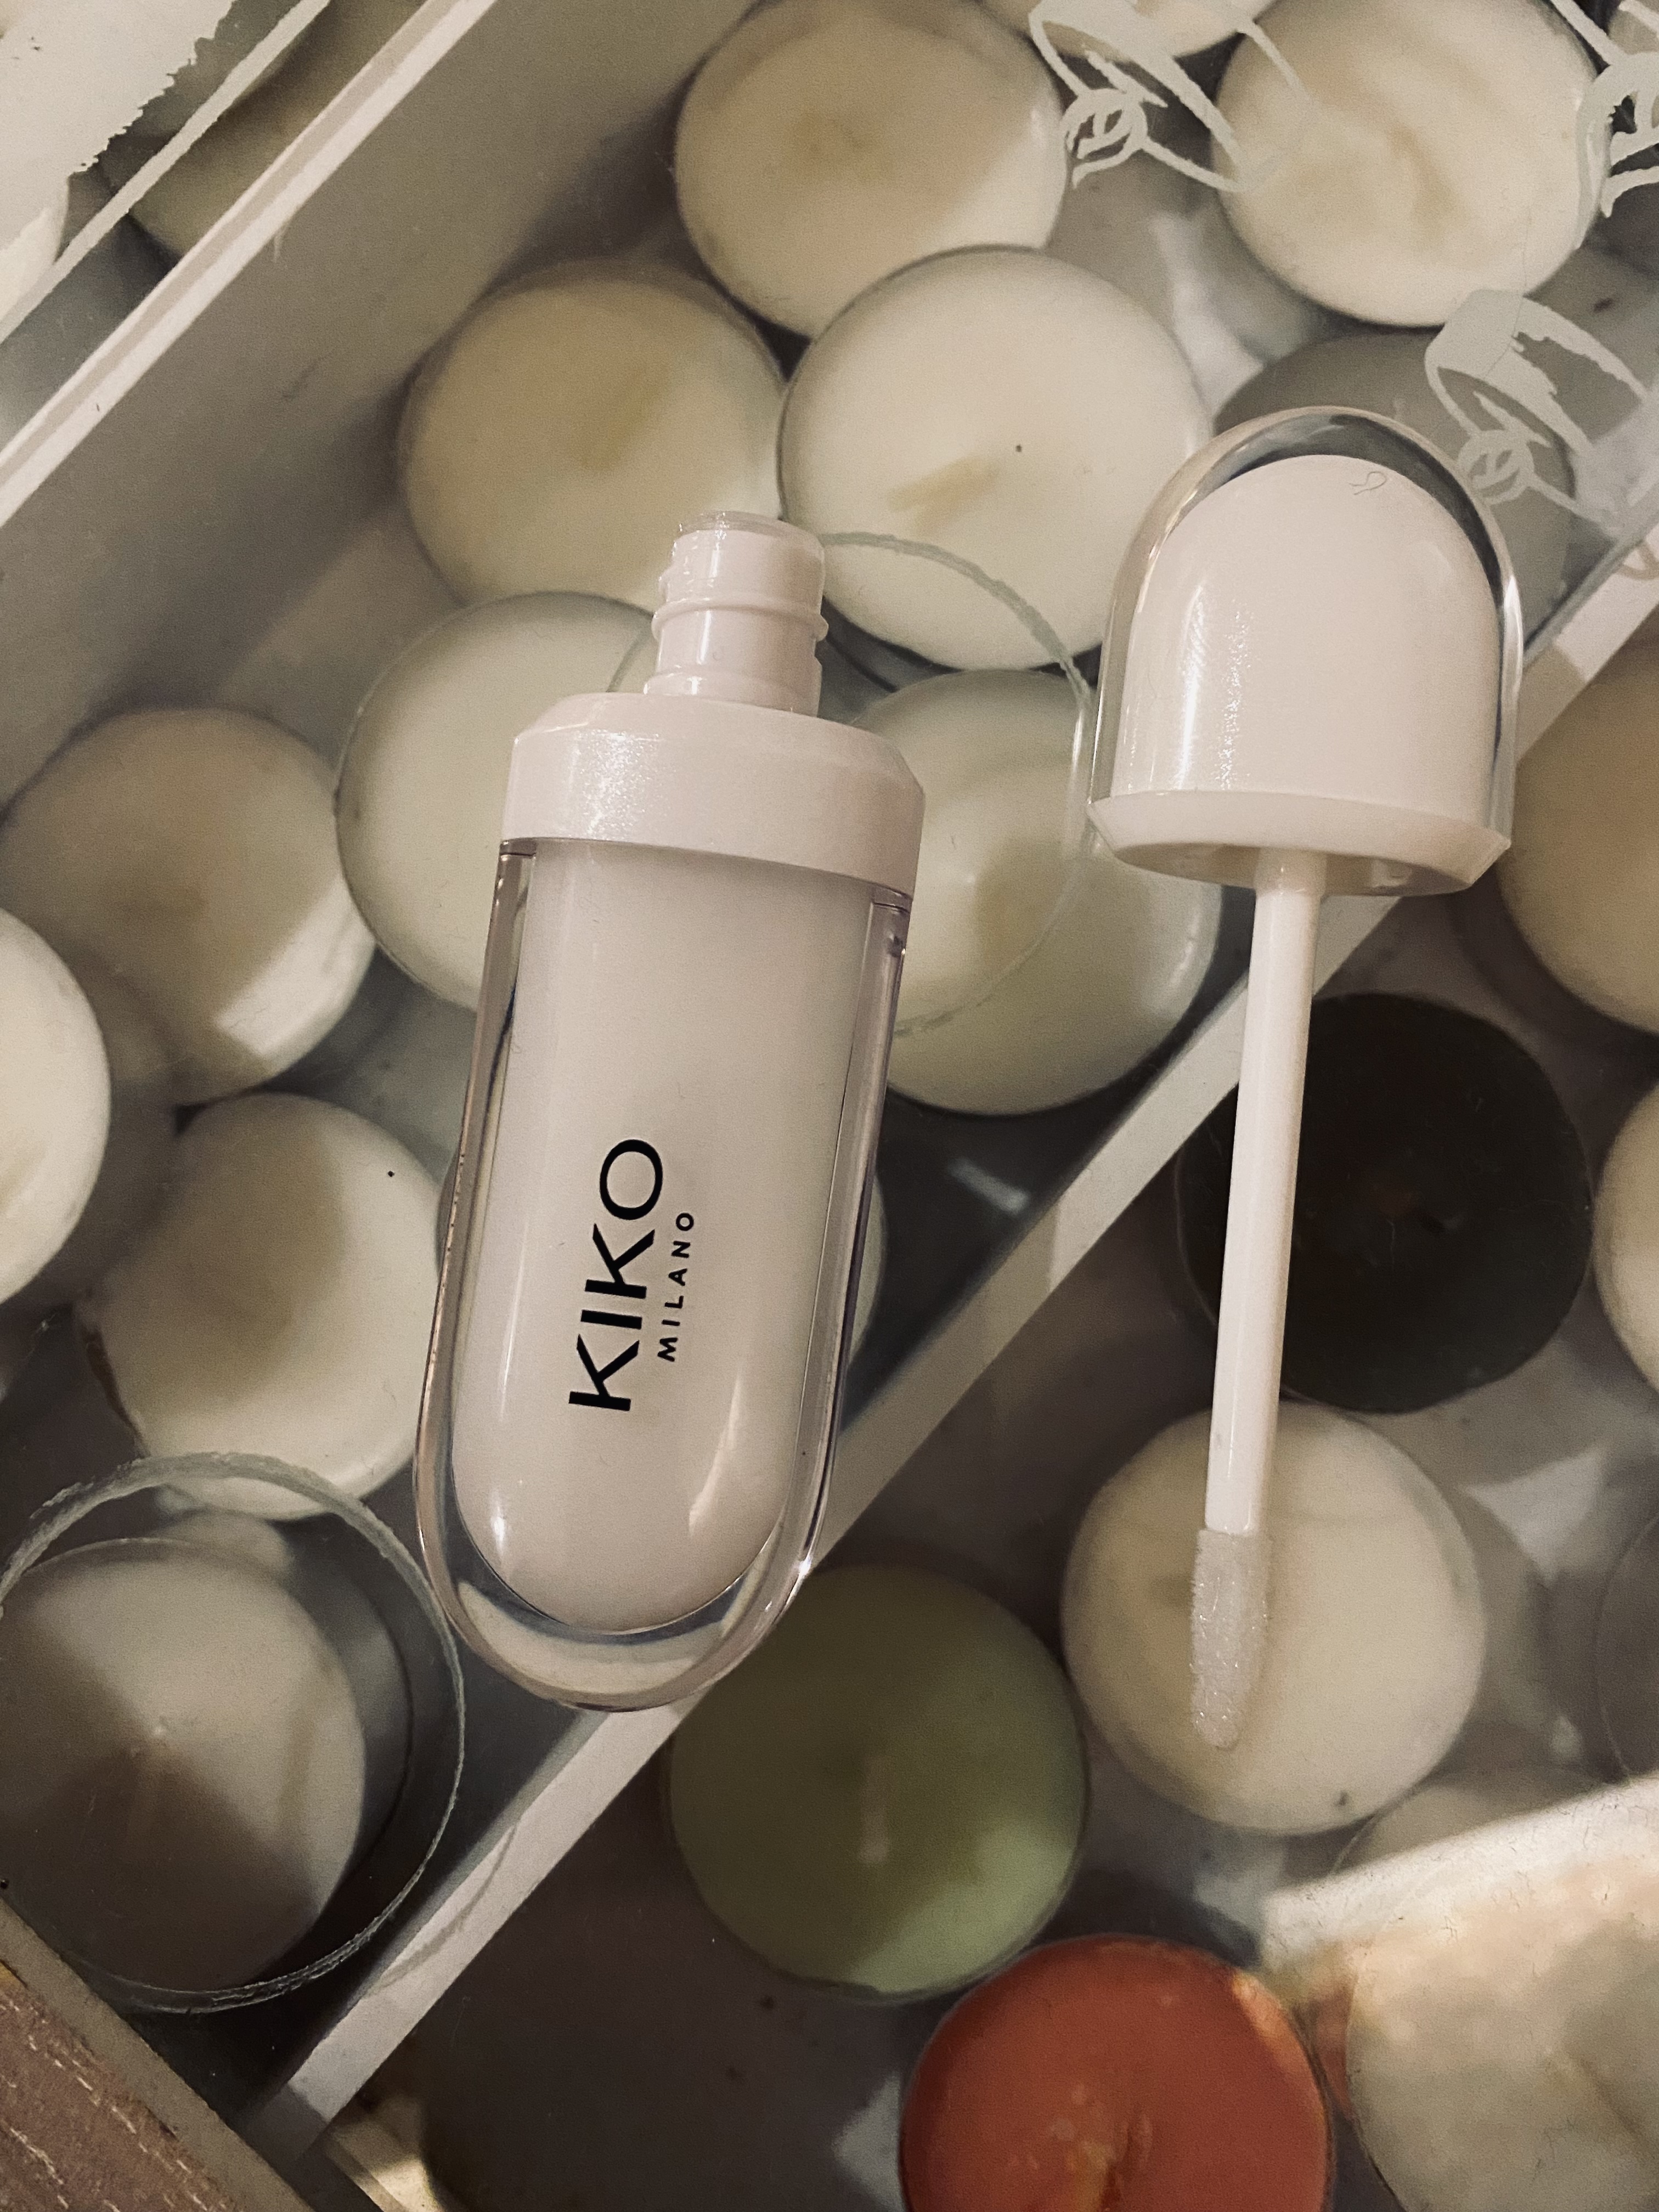 Kiko Milano Lip Volume Plumping Effect Lip Cream